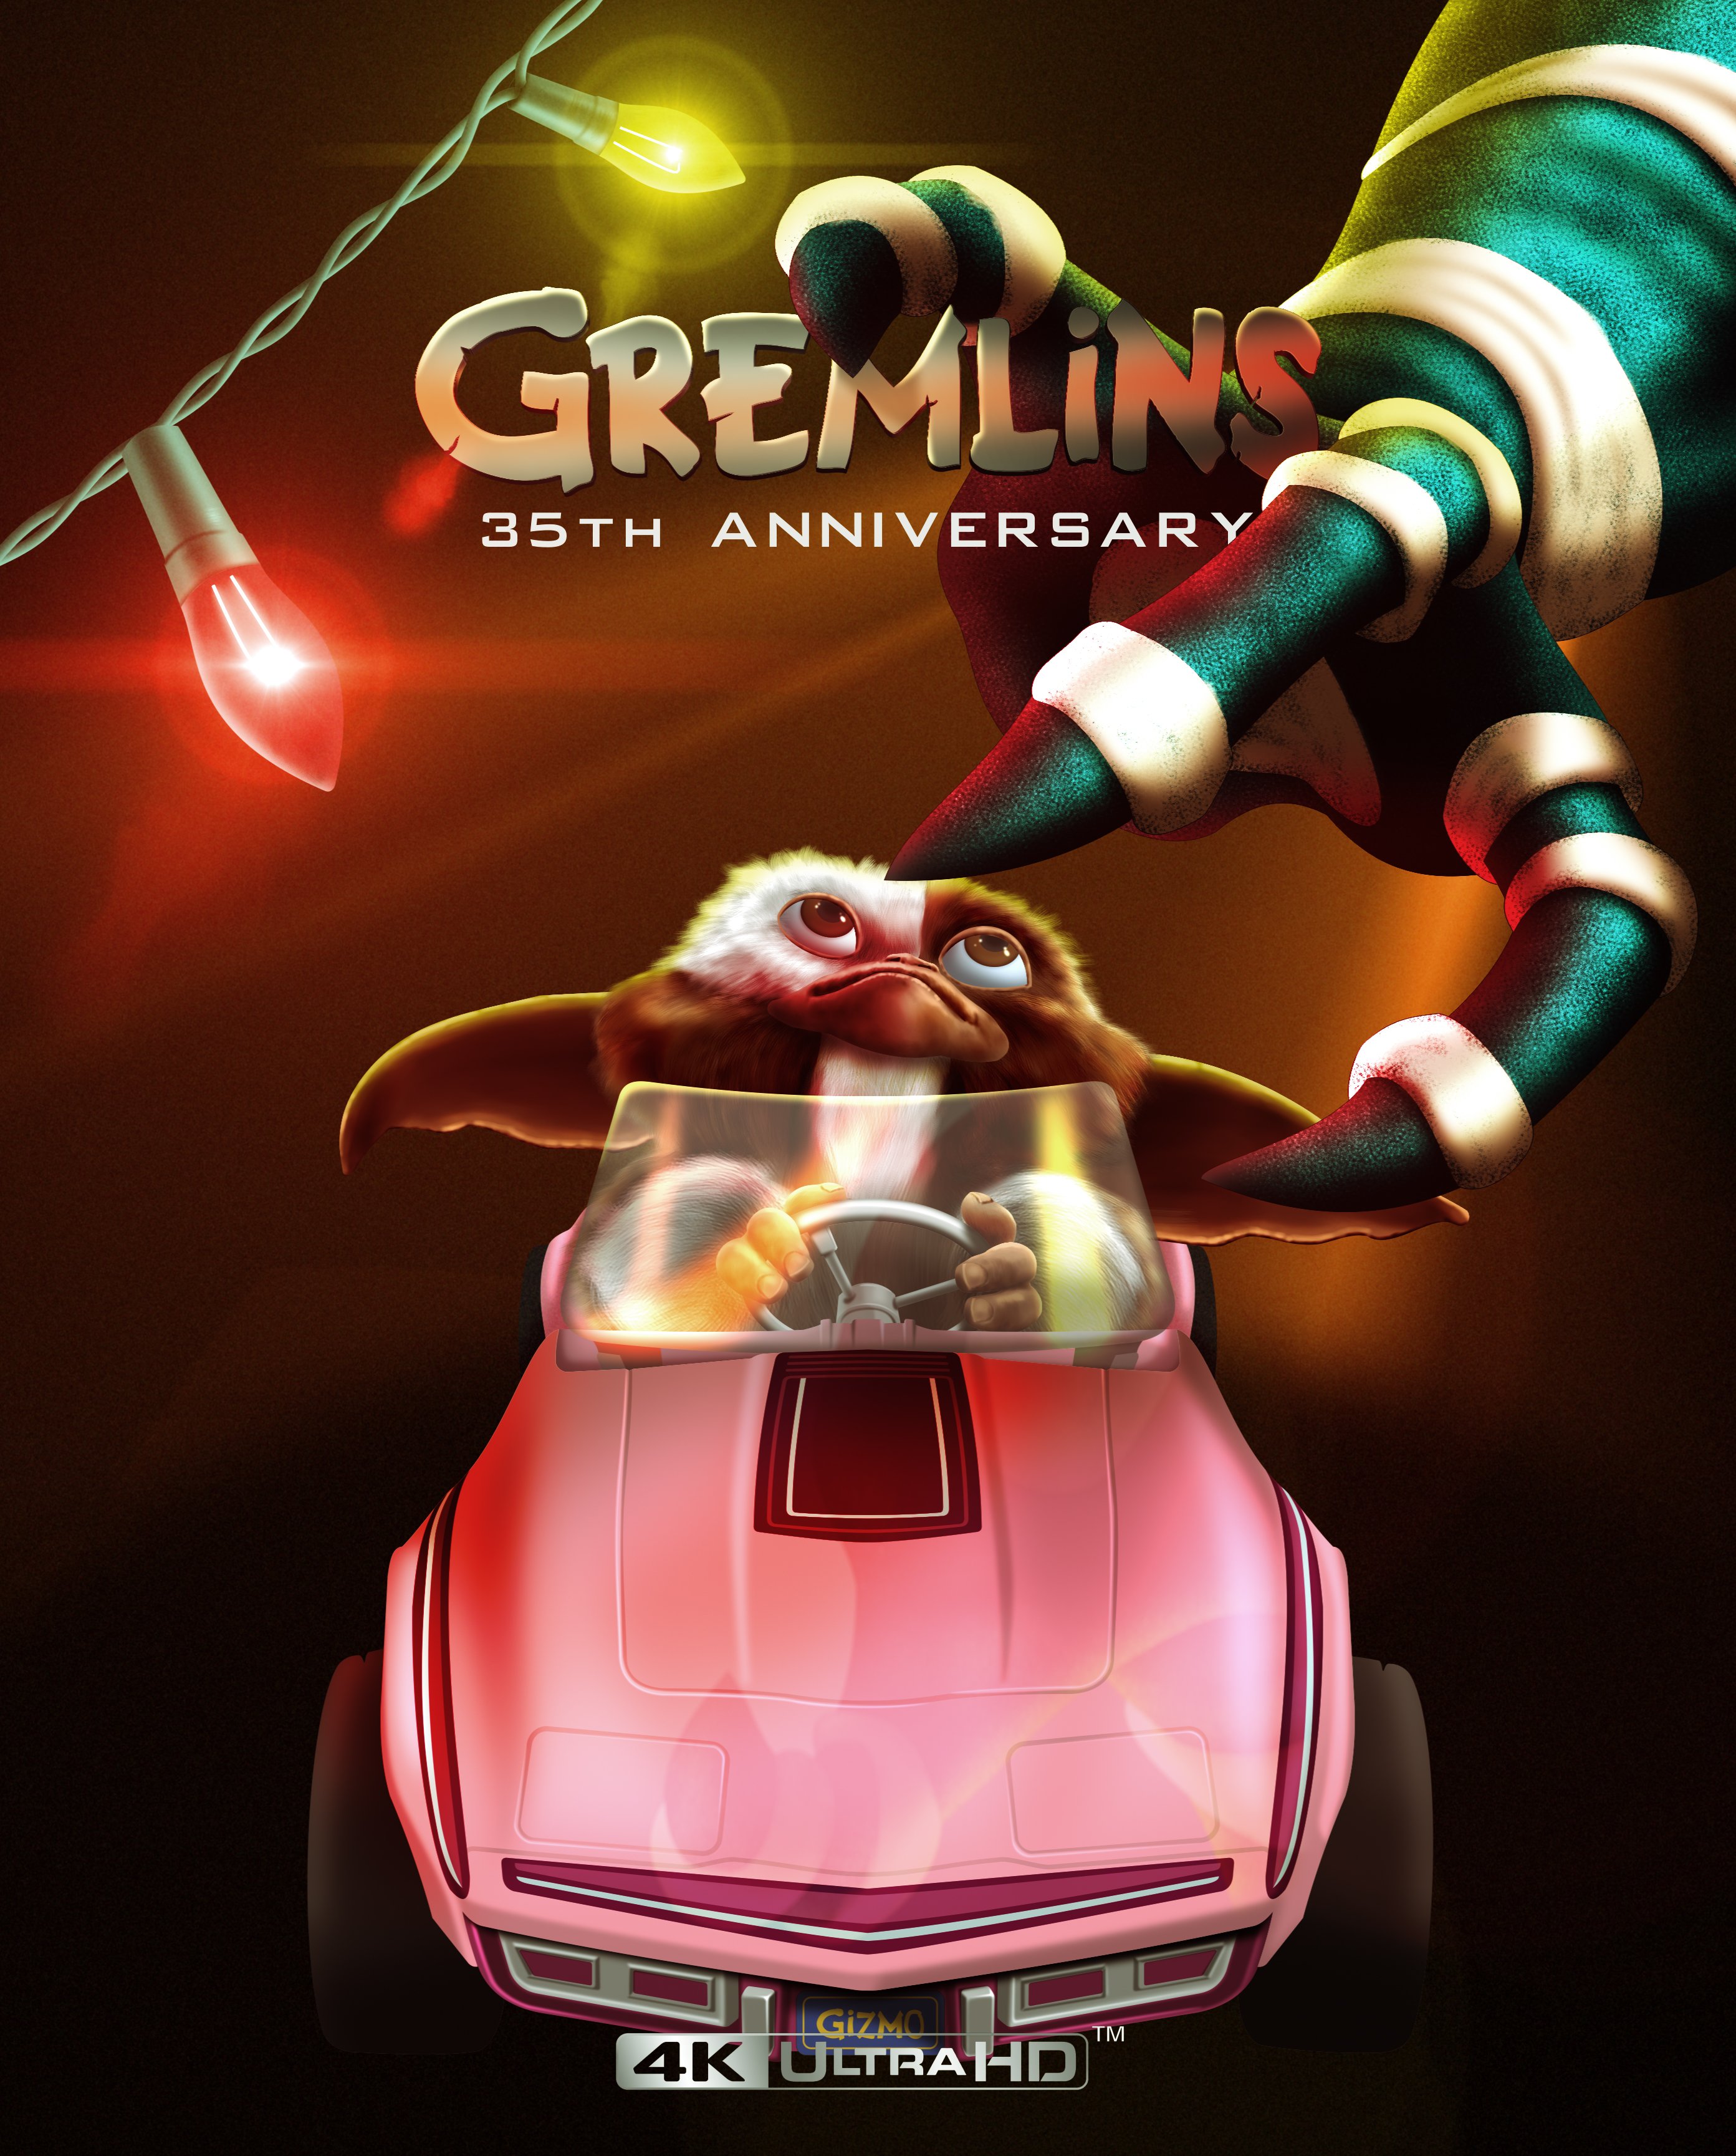 Tres Corderos on X: Gremlins 35th anniversary. 4k edition. Digital  illustration. Movie poster. @talenthouse artwork contest. @joe_dante # gremlins #gremlins4k #fanart  / X